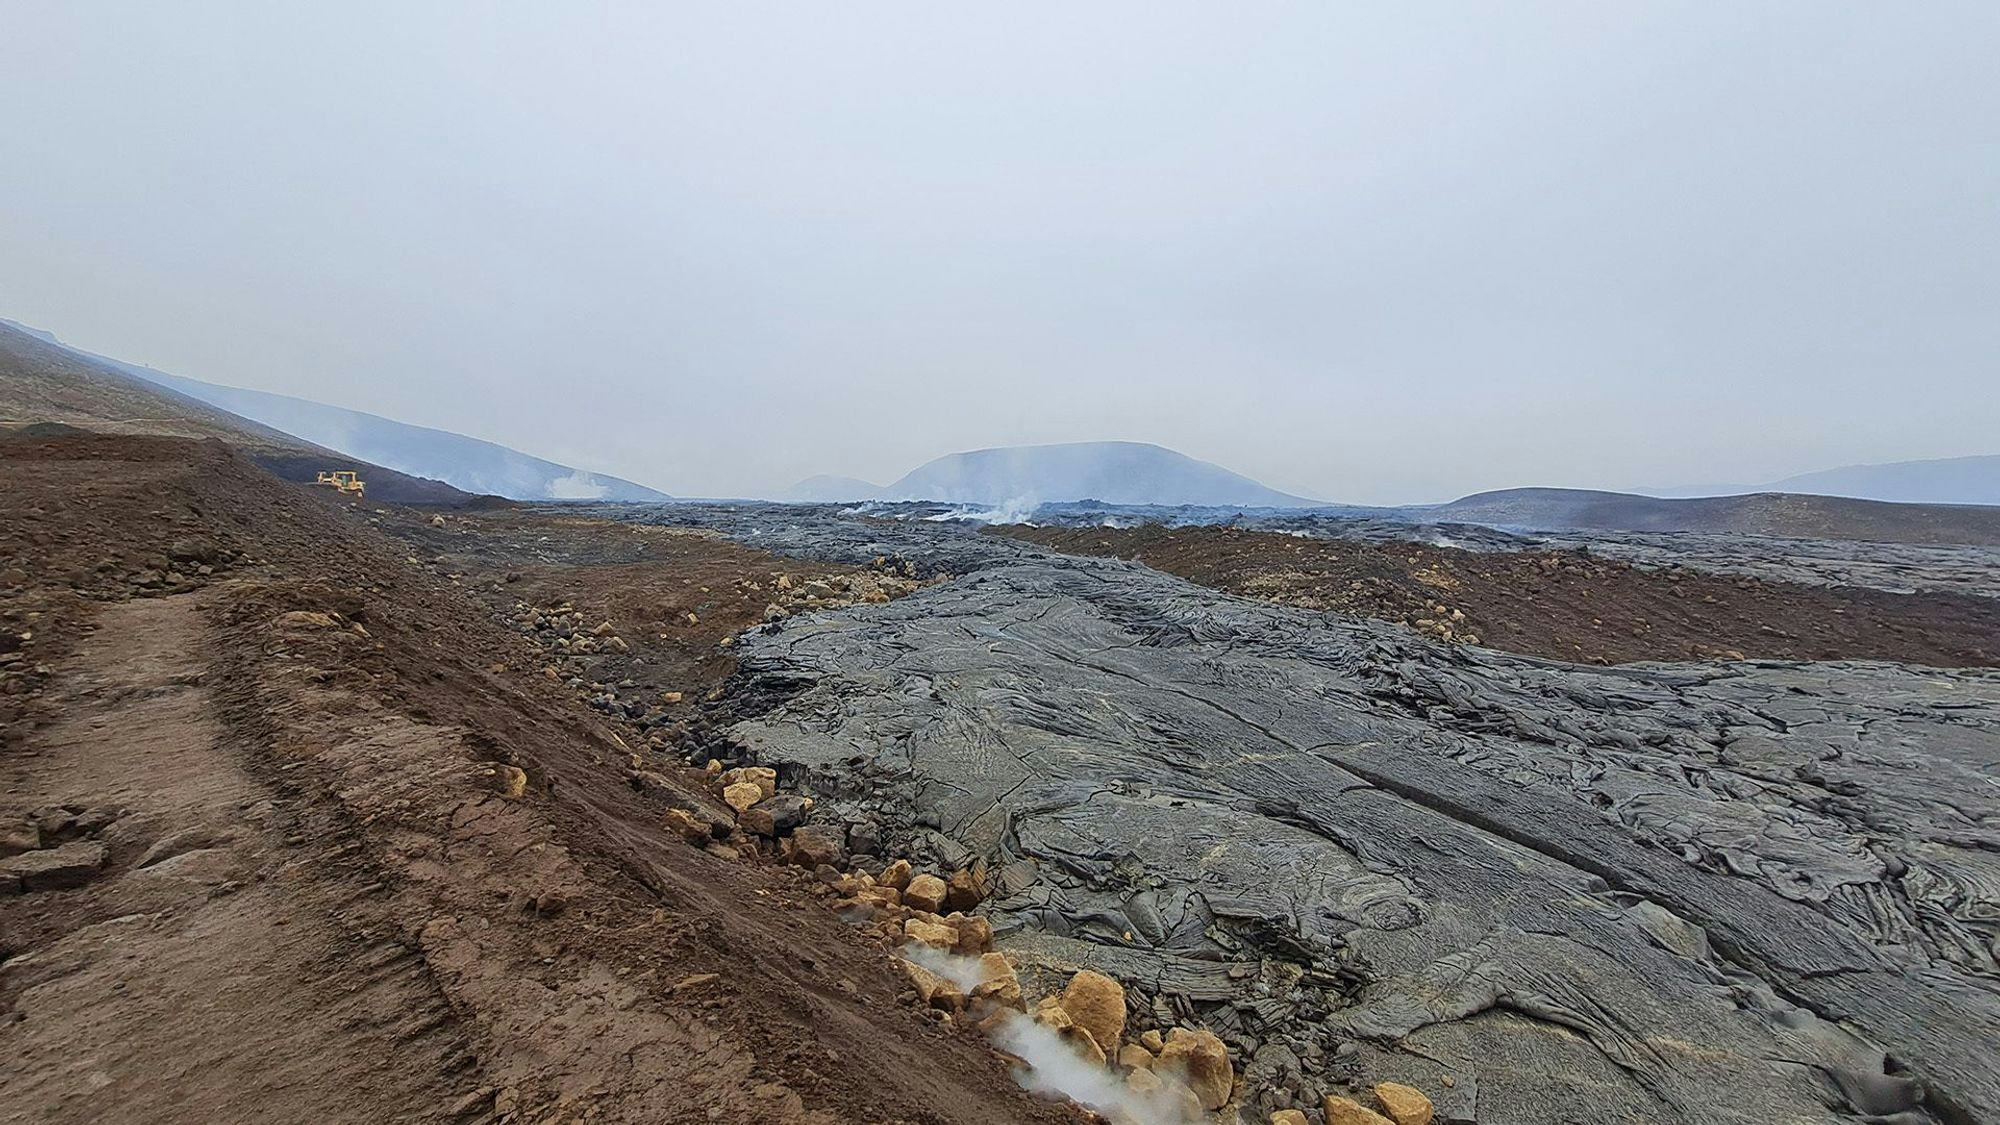 A landscape featuring dark, hardened lava flow 